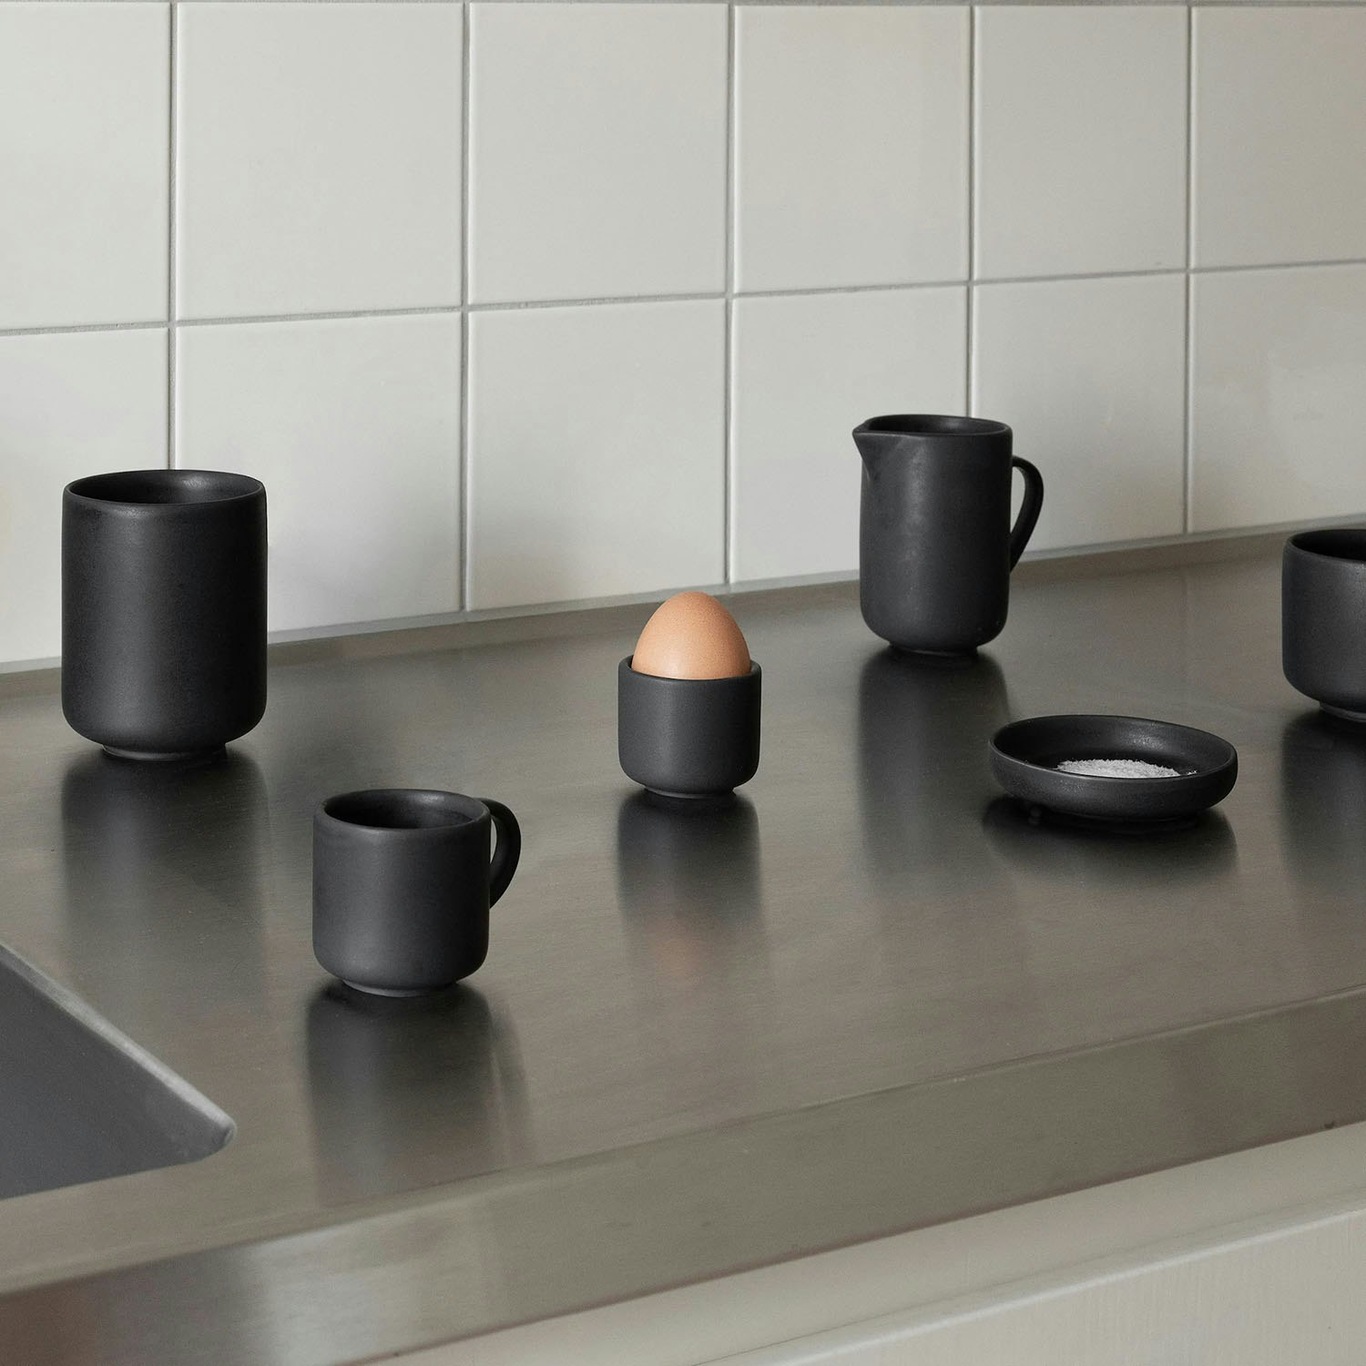 https://royaldesign.com/image/2/louise-roe-ceramic-pisu-17-espresso-cup-ink-black-2?w=800&quality=80